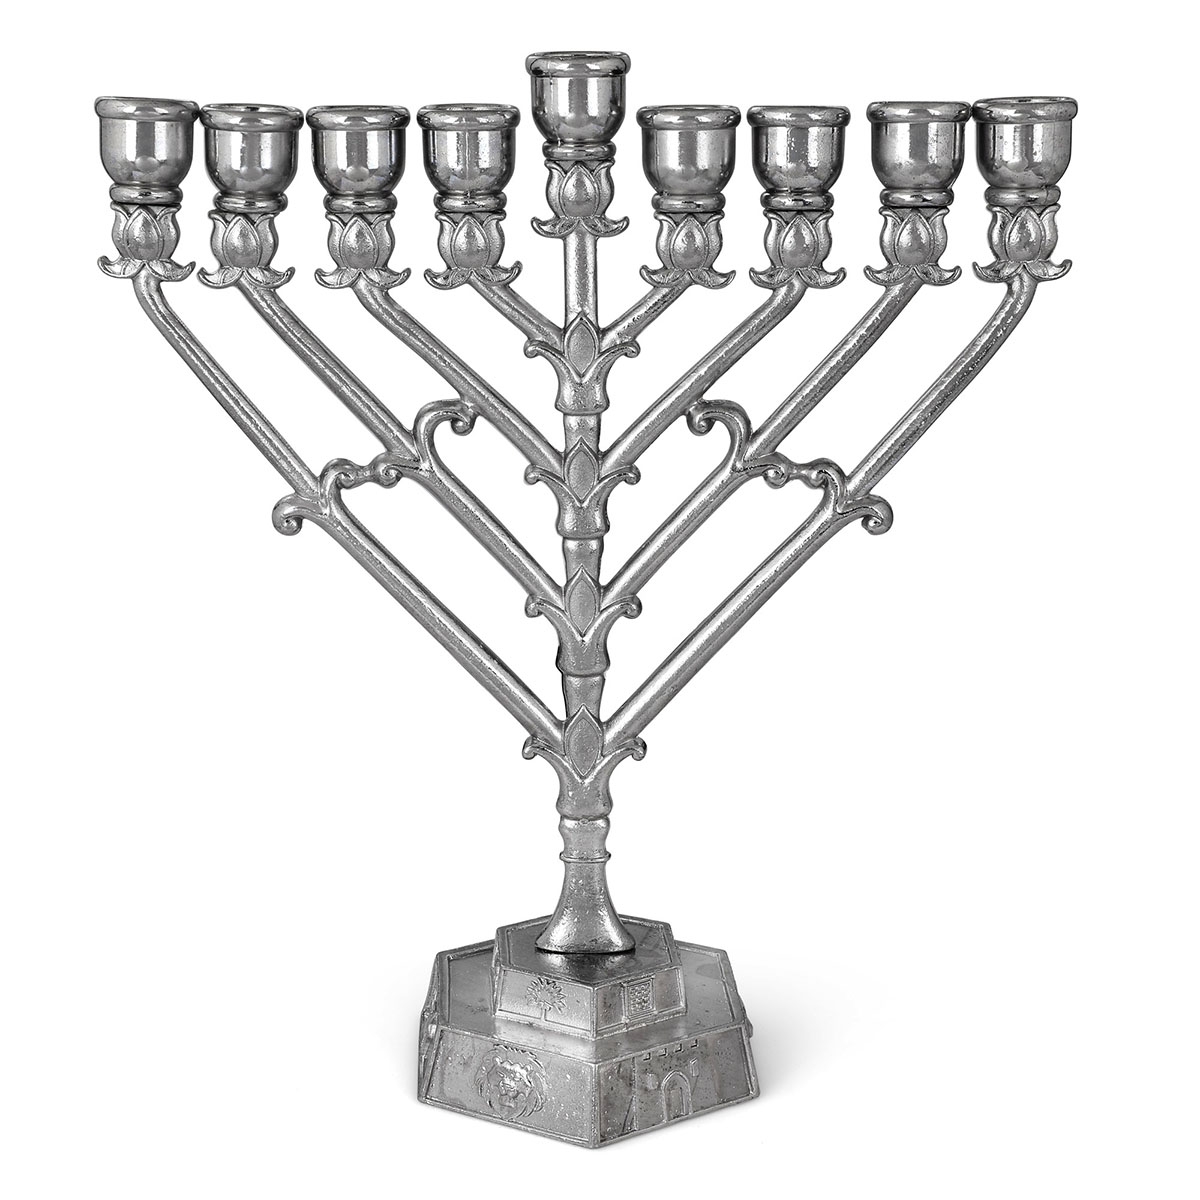 Refined Habad Hanukkah Menorah With 12 Tribes Design - 1